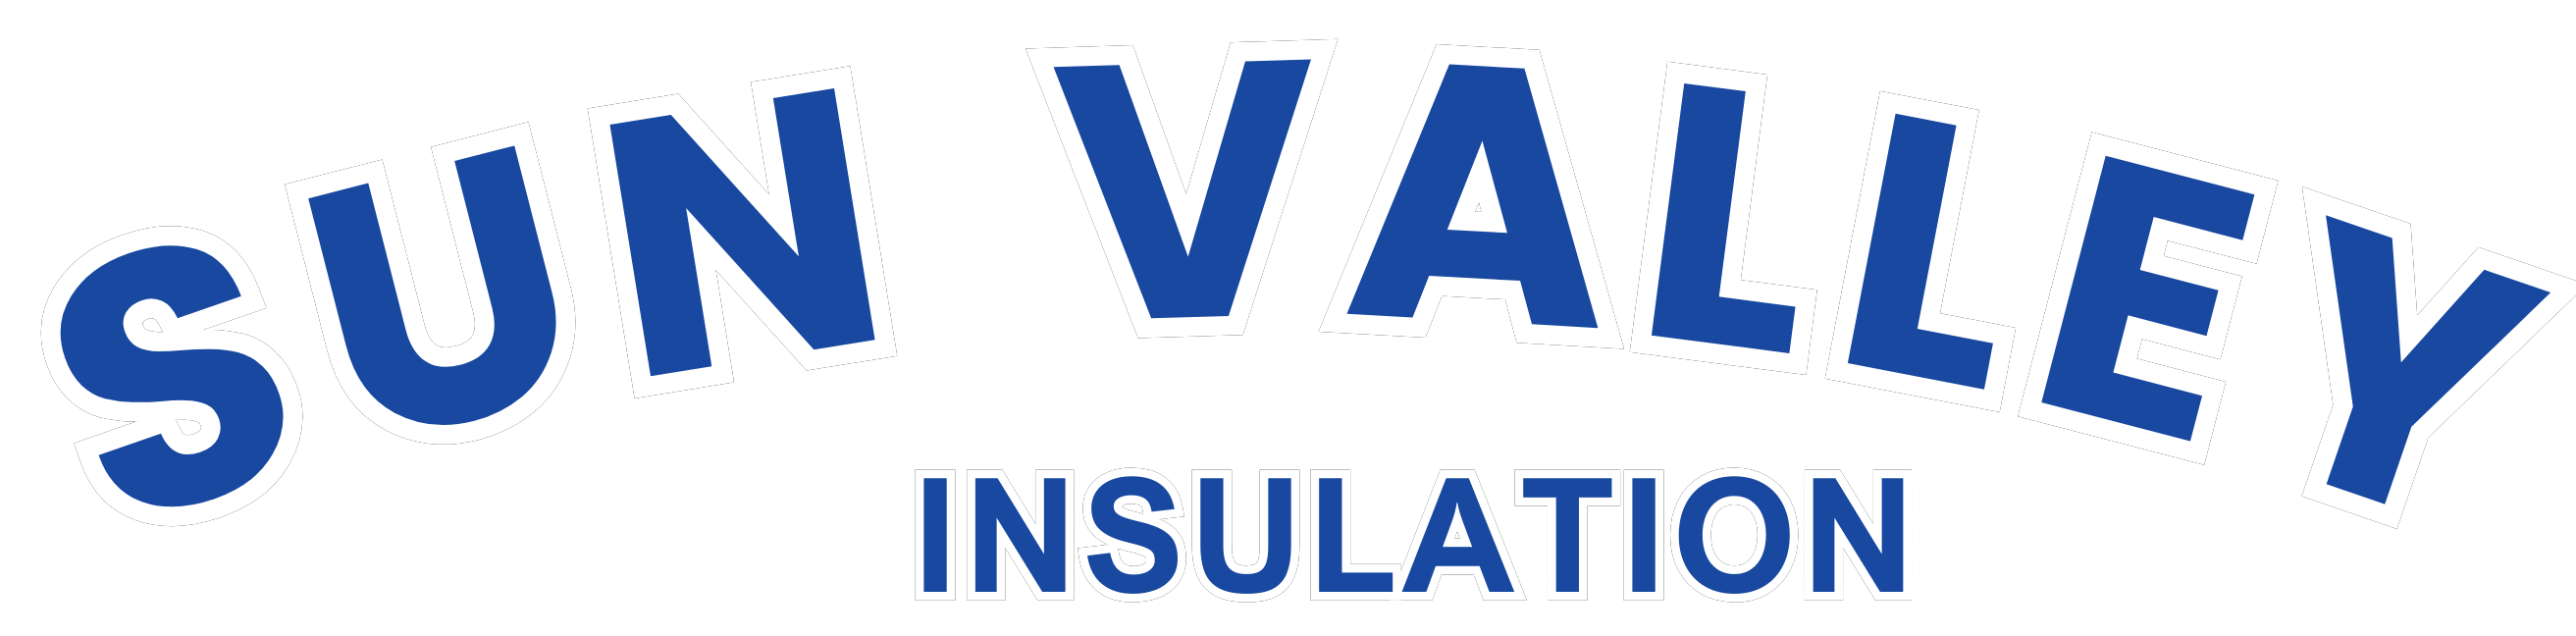 sun valley insulation placeholder logo